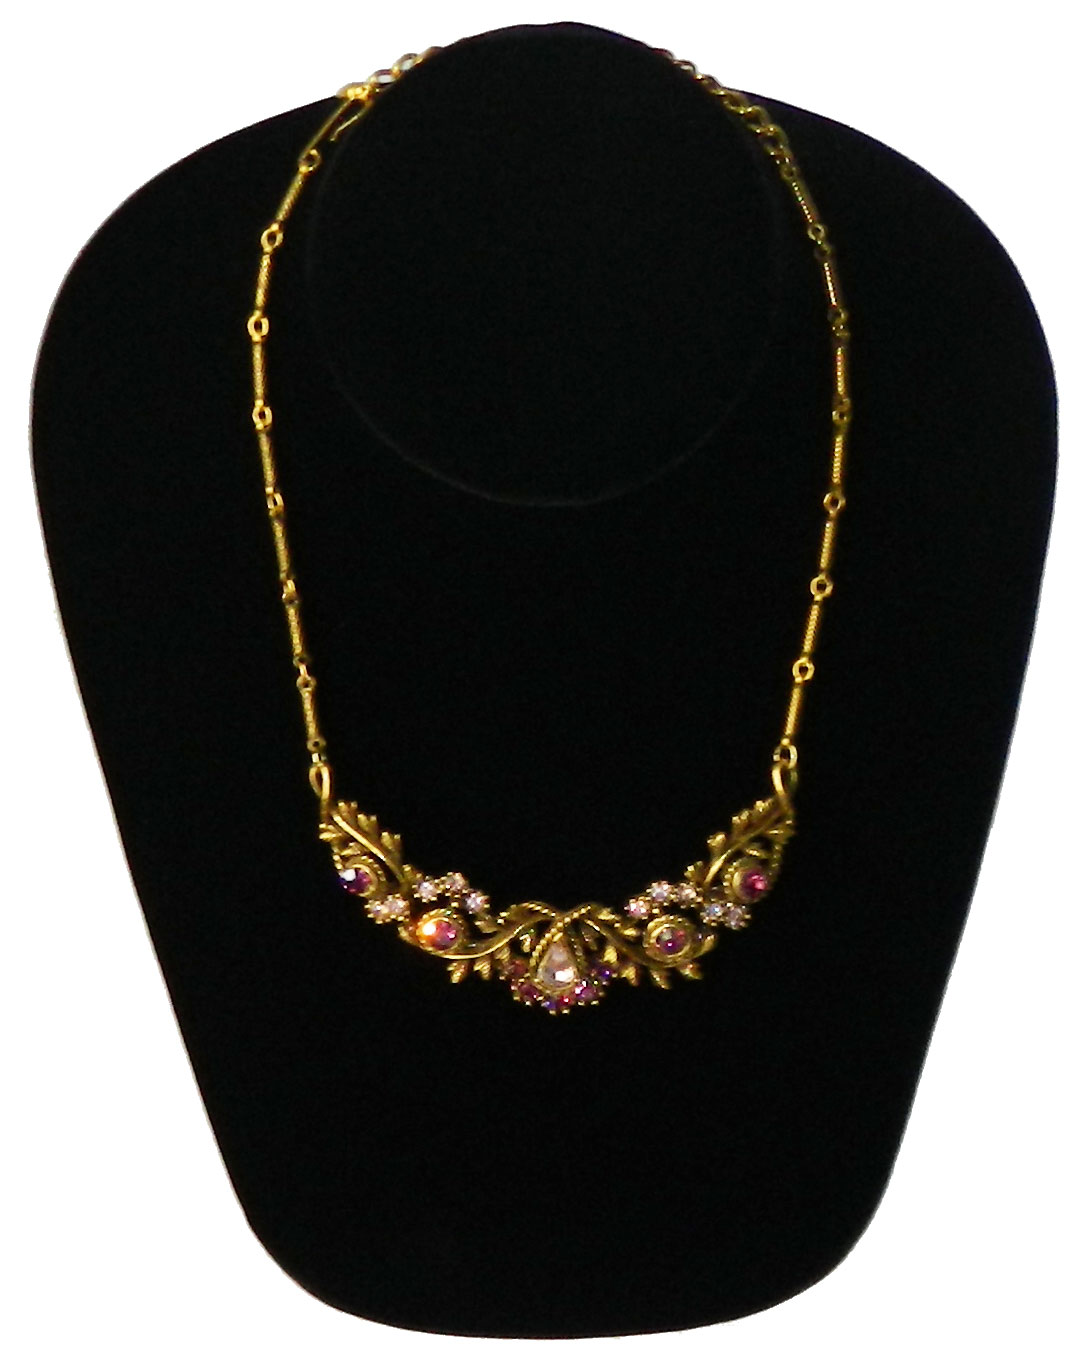 1950s purple rhinestone necklace